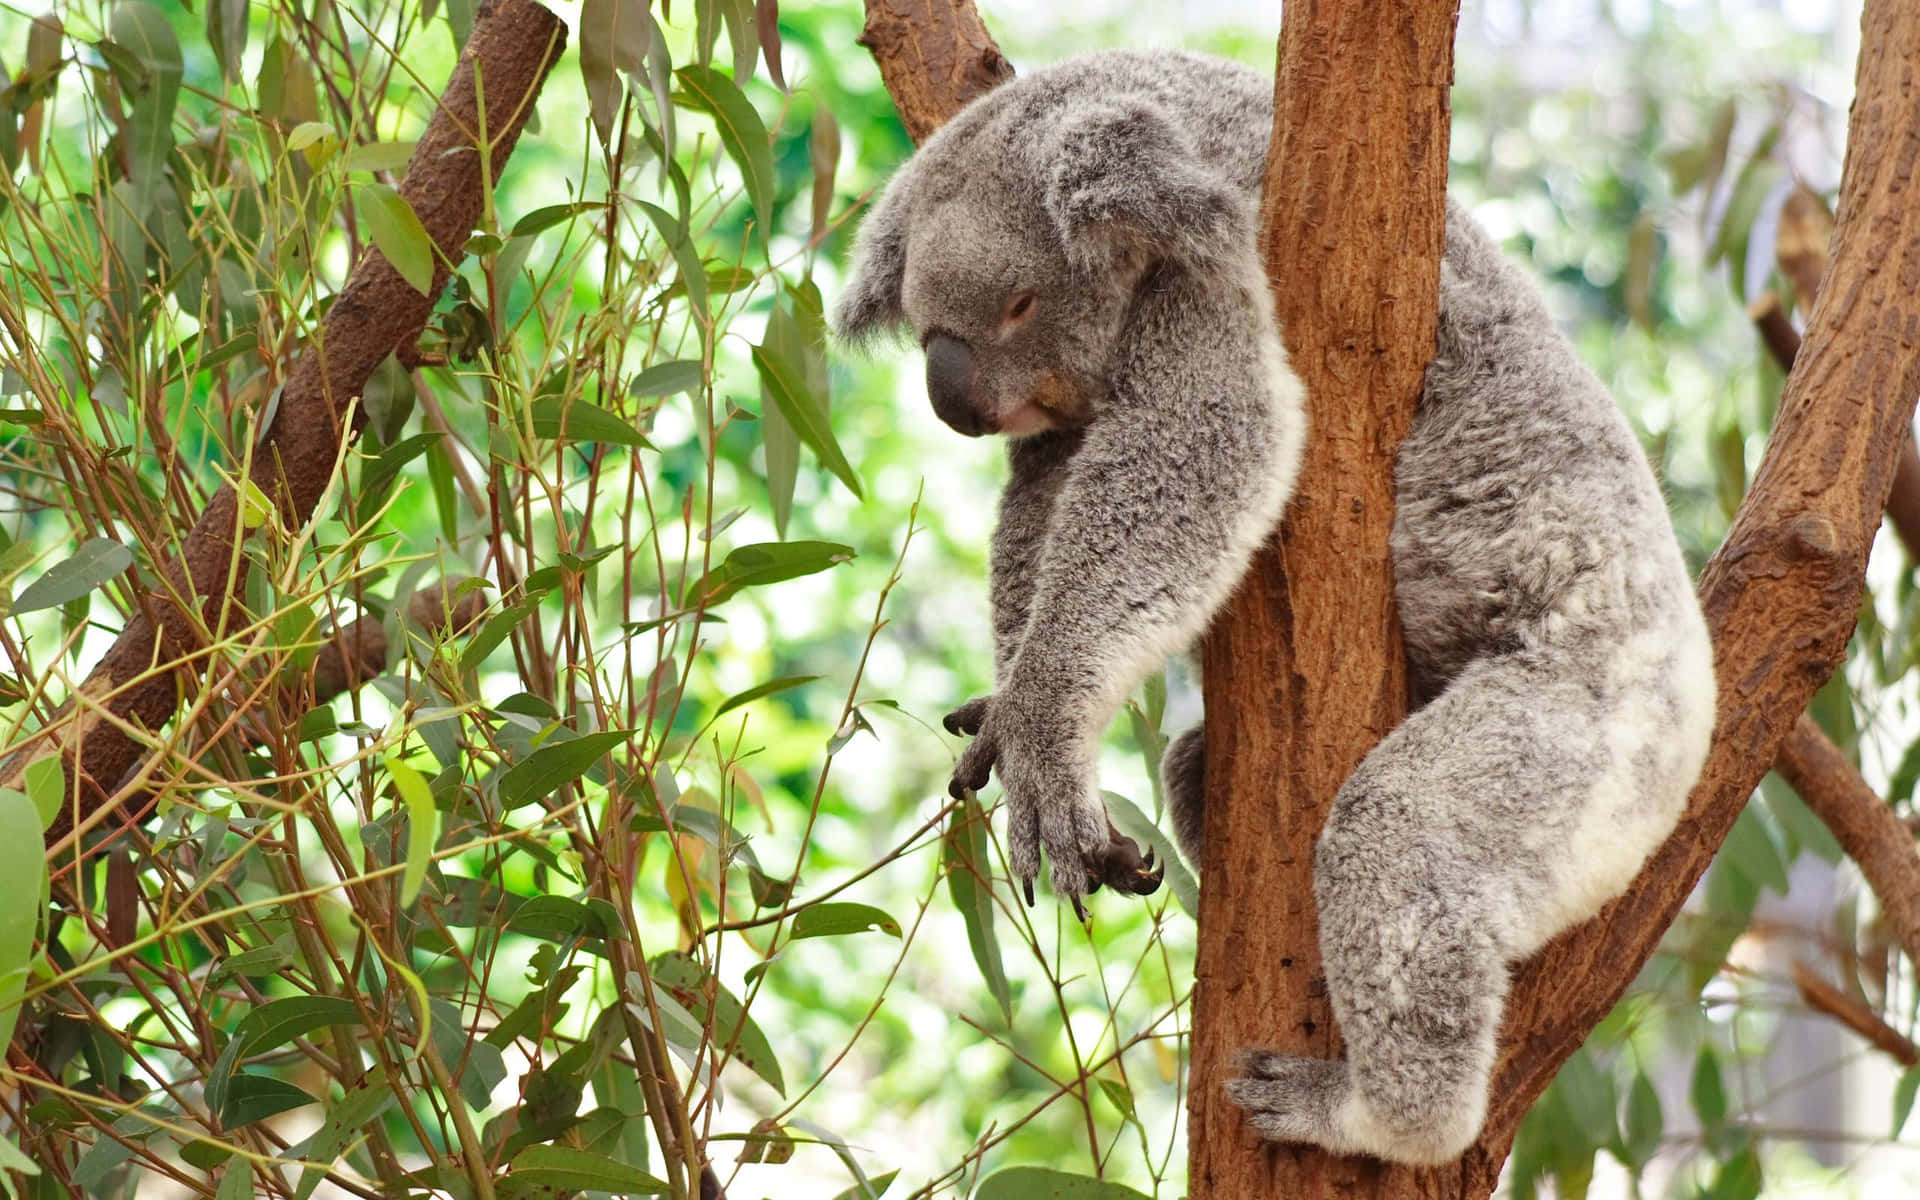 A Koala Enjoying Life in a Tree